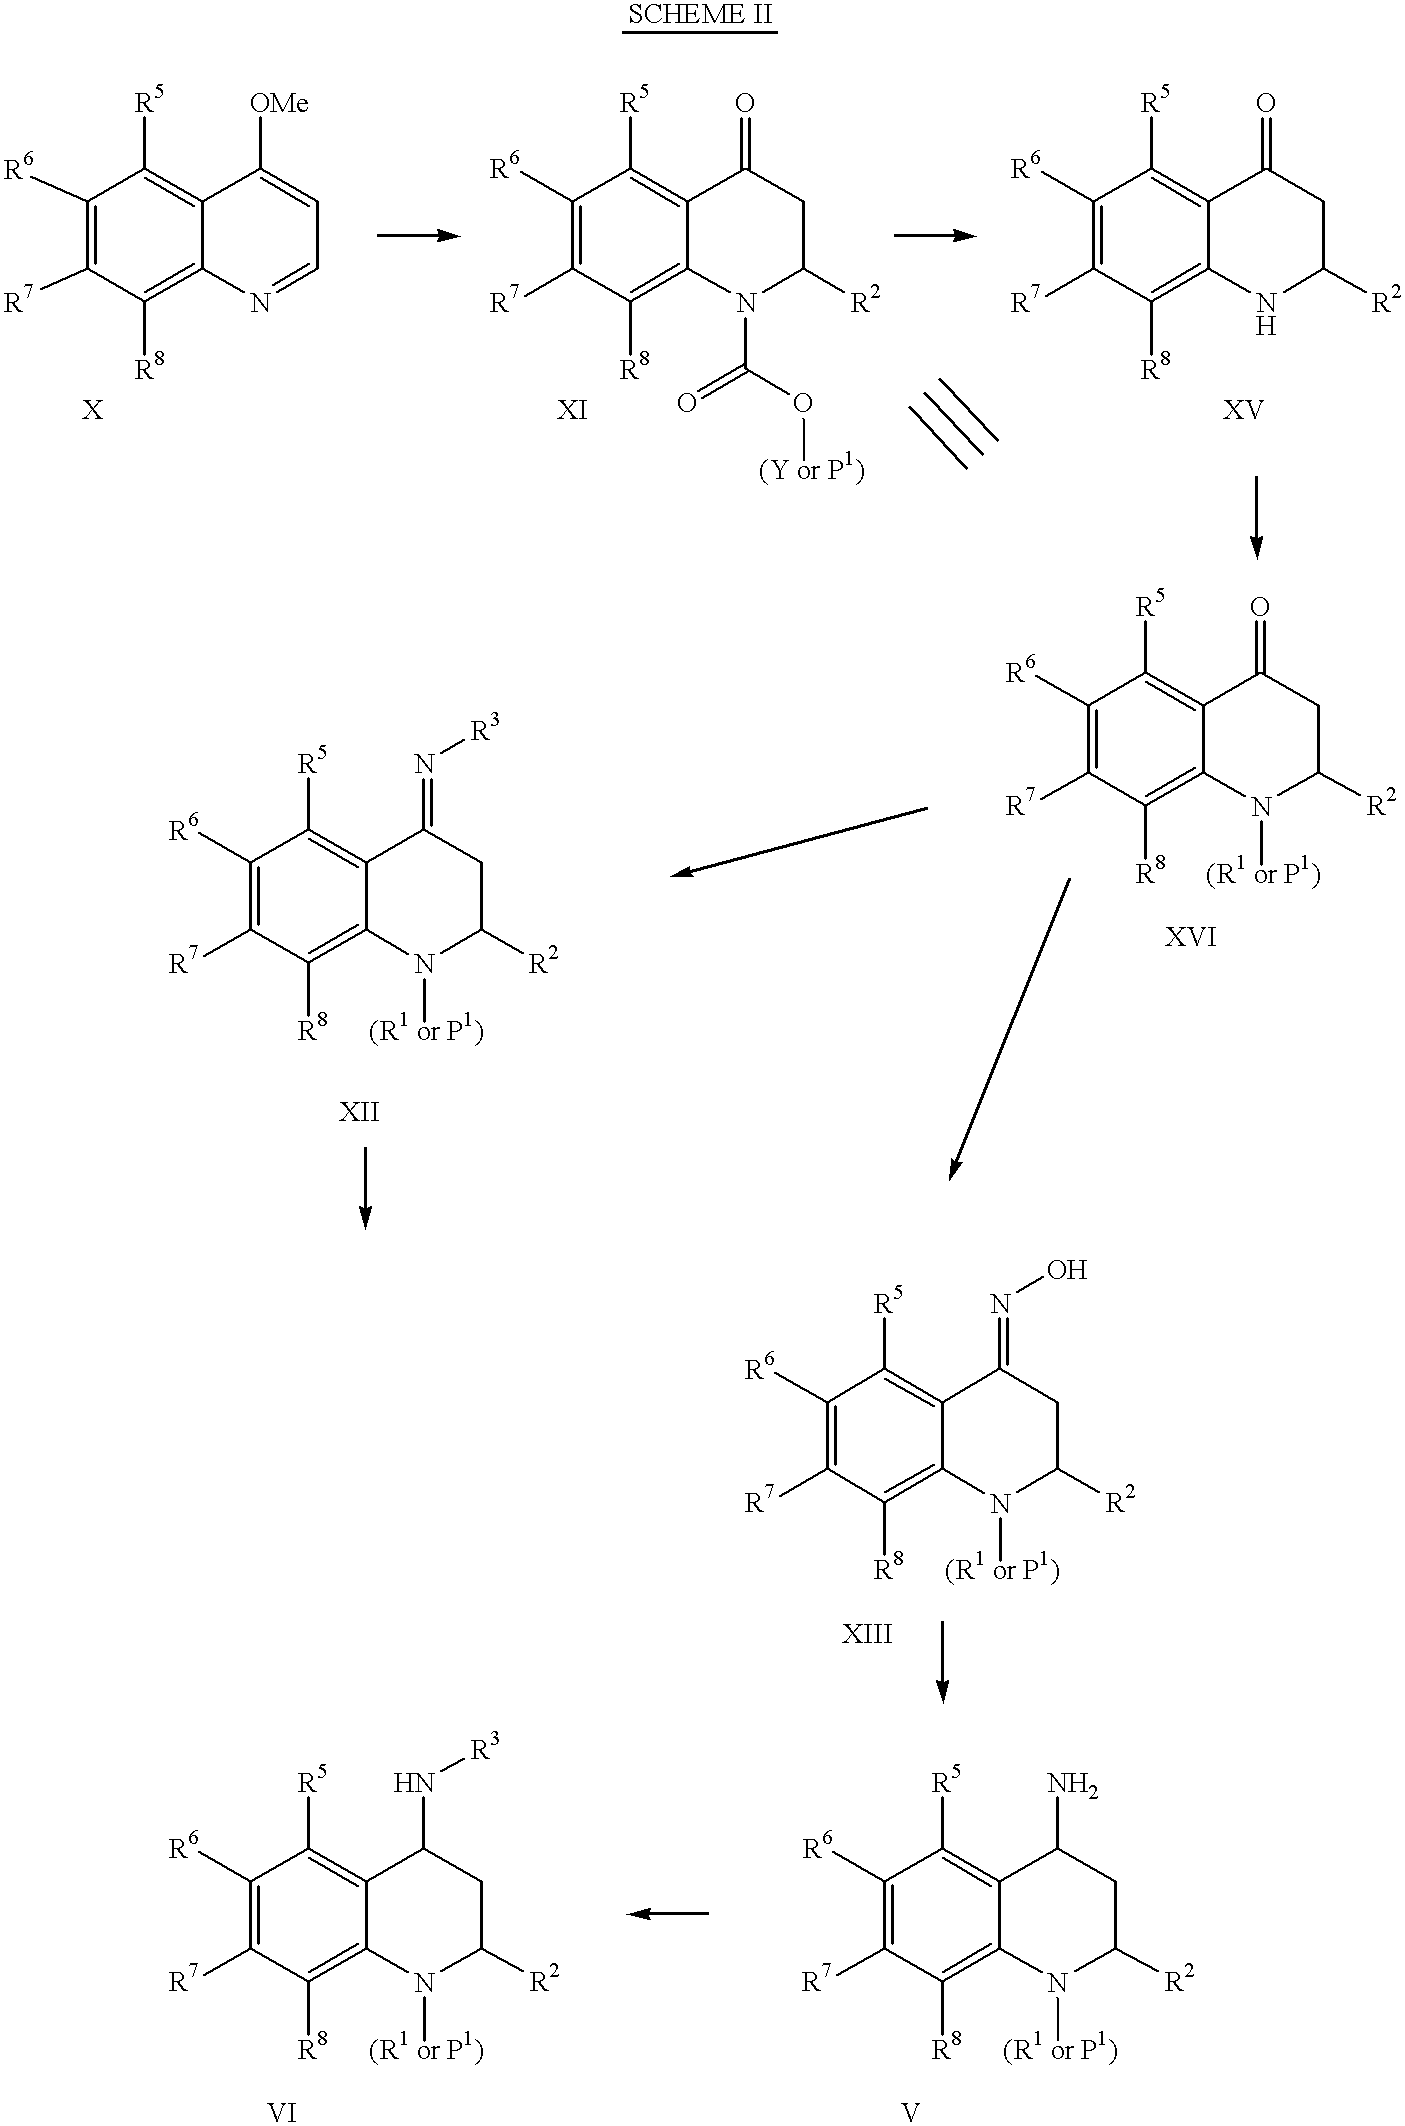 4-Carboxyamino-2-substituted-1,2,3,4-tetrahydroquinolines